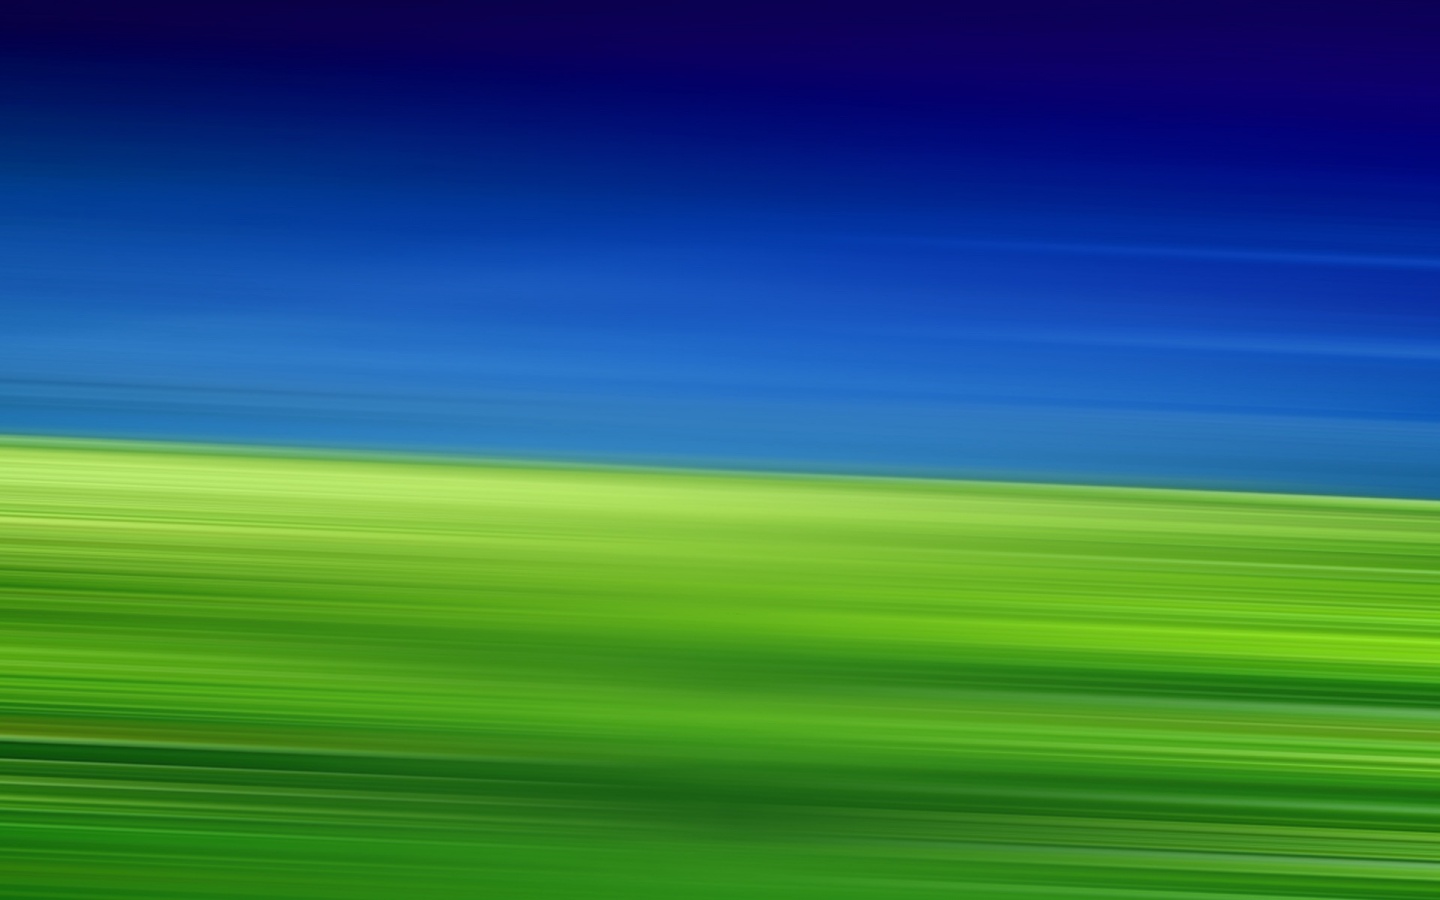 1440x900 Green and Dark Blue desktop PC and Mac wallpaper 1440x900